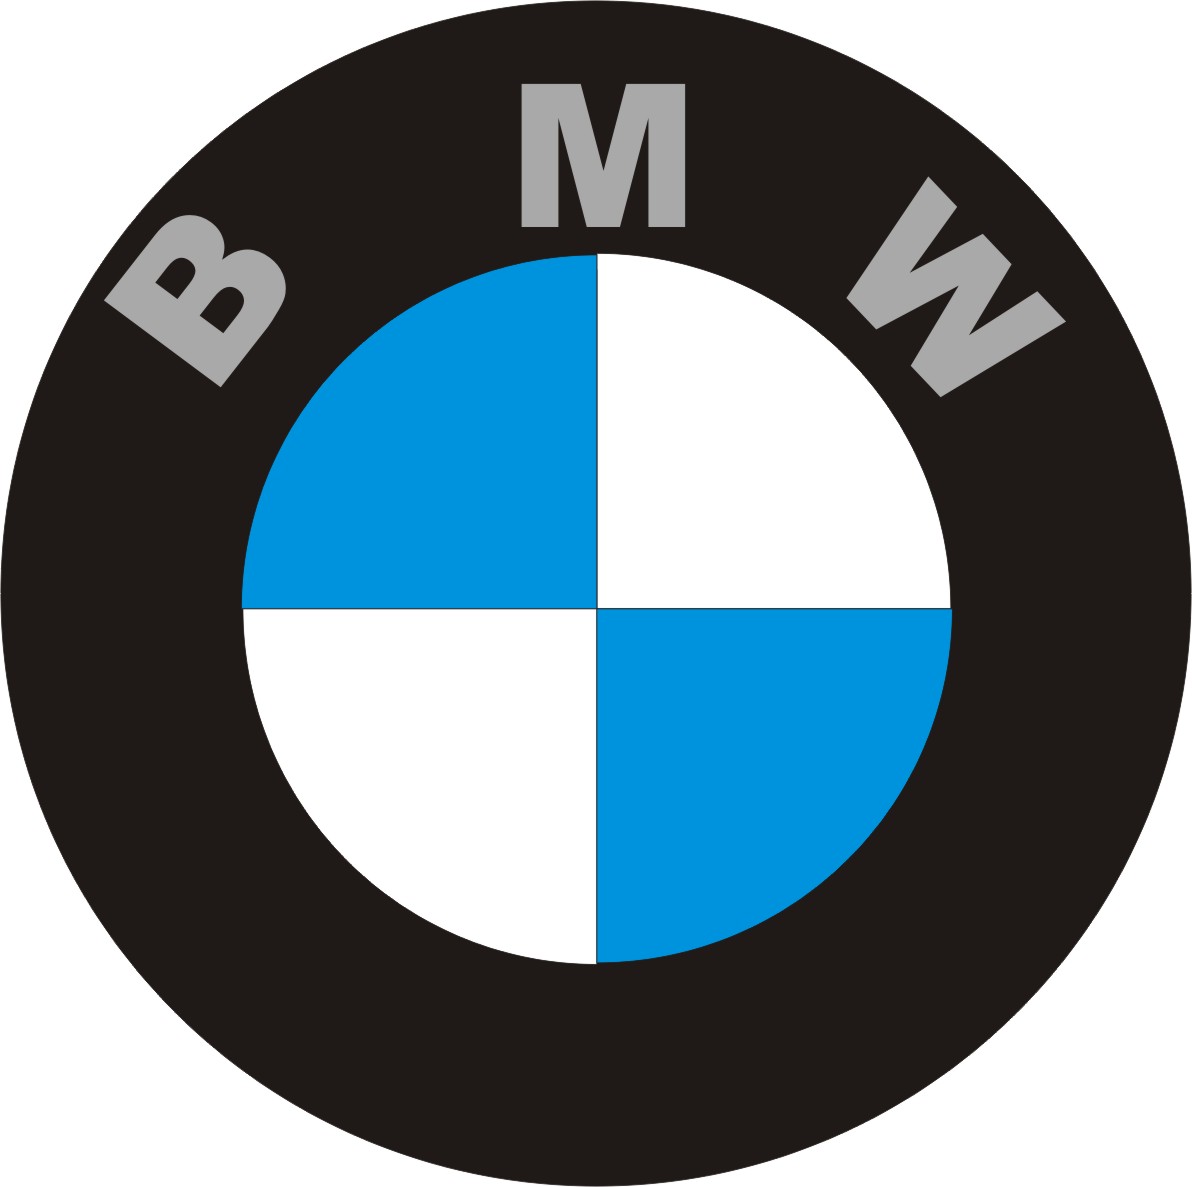 Bmw logo meaning #1